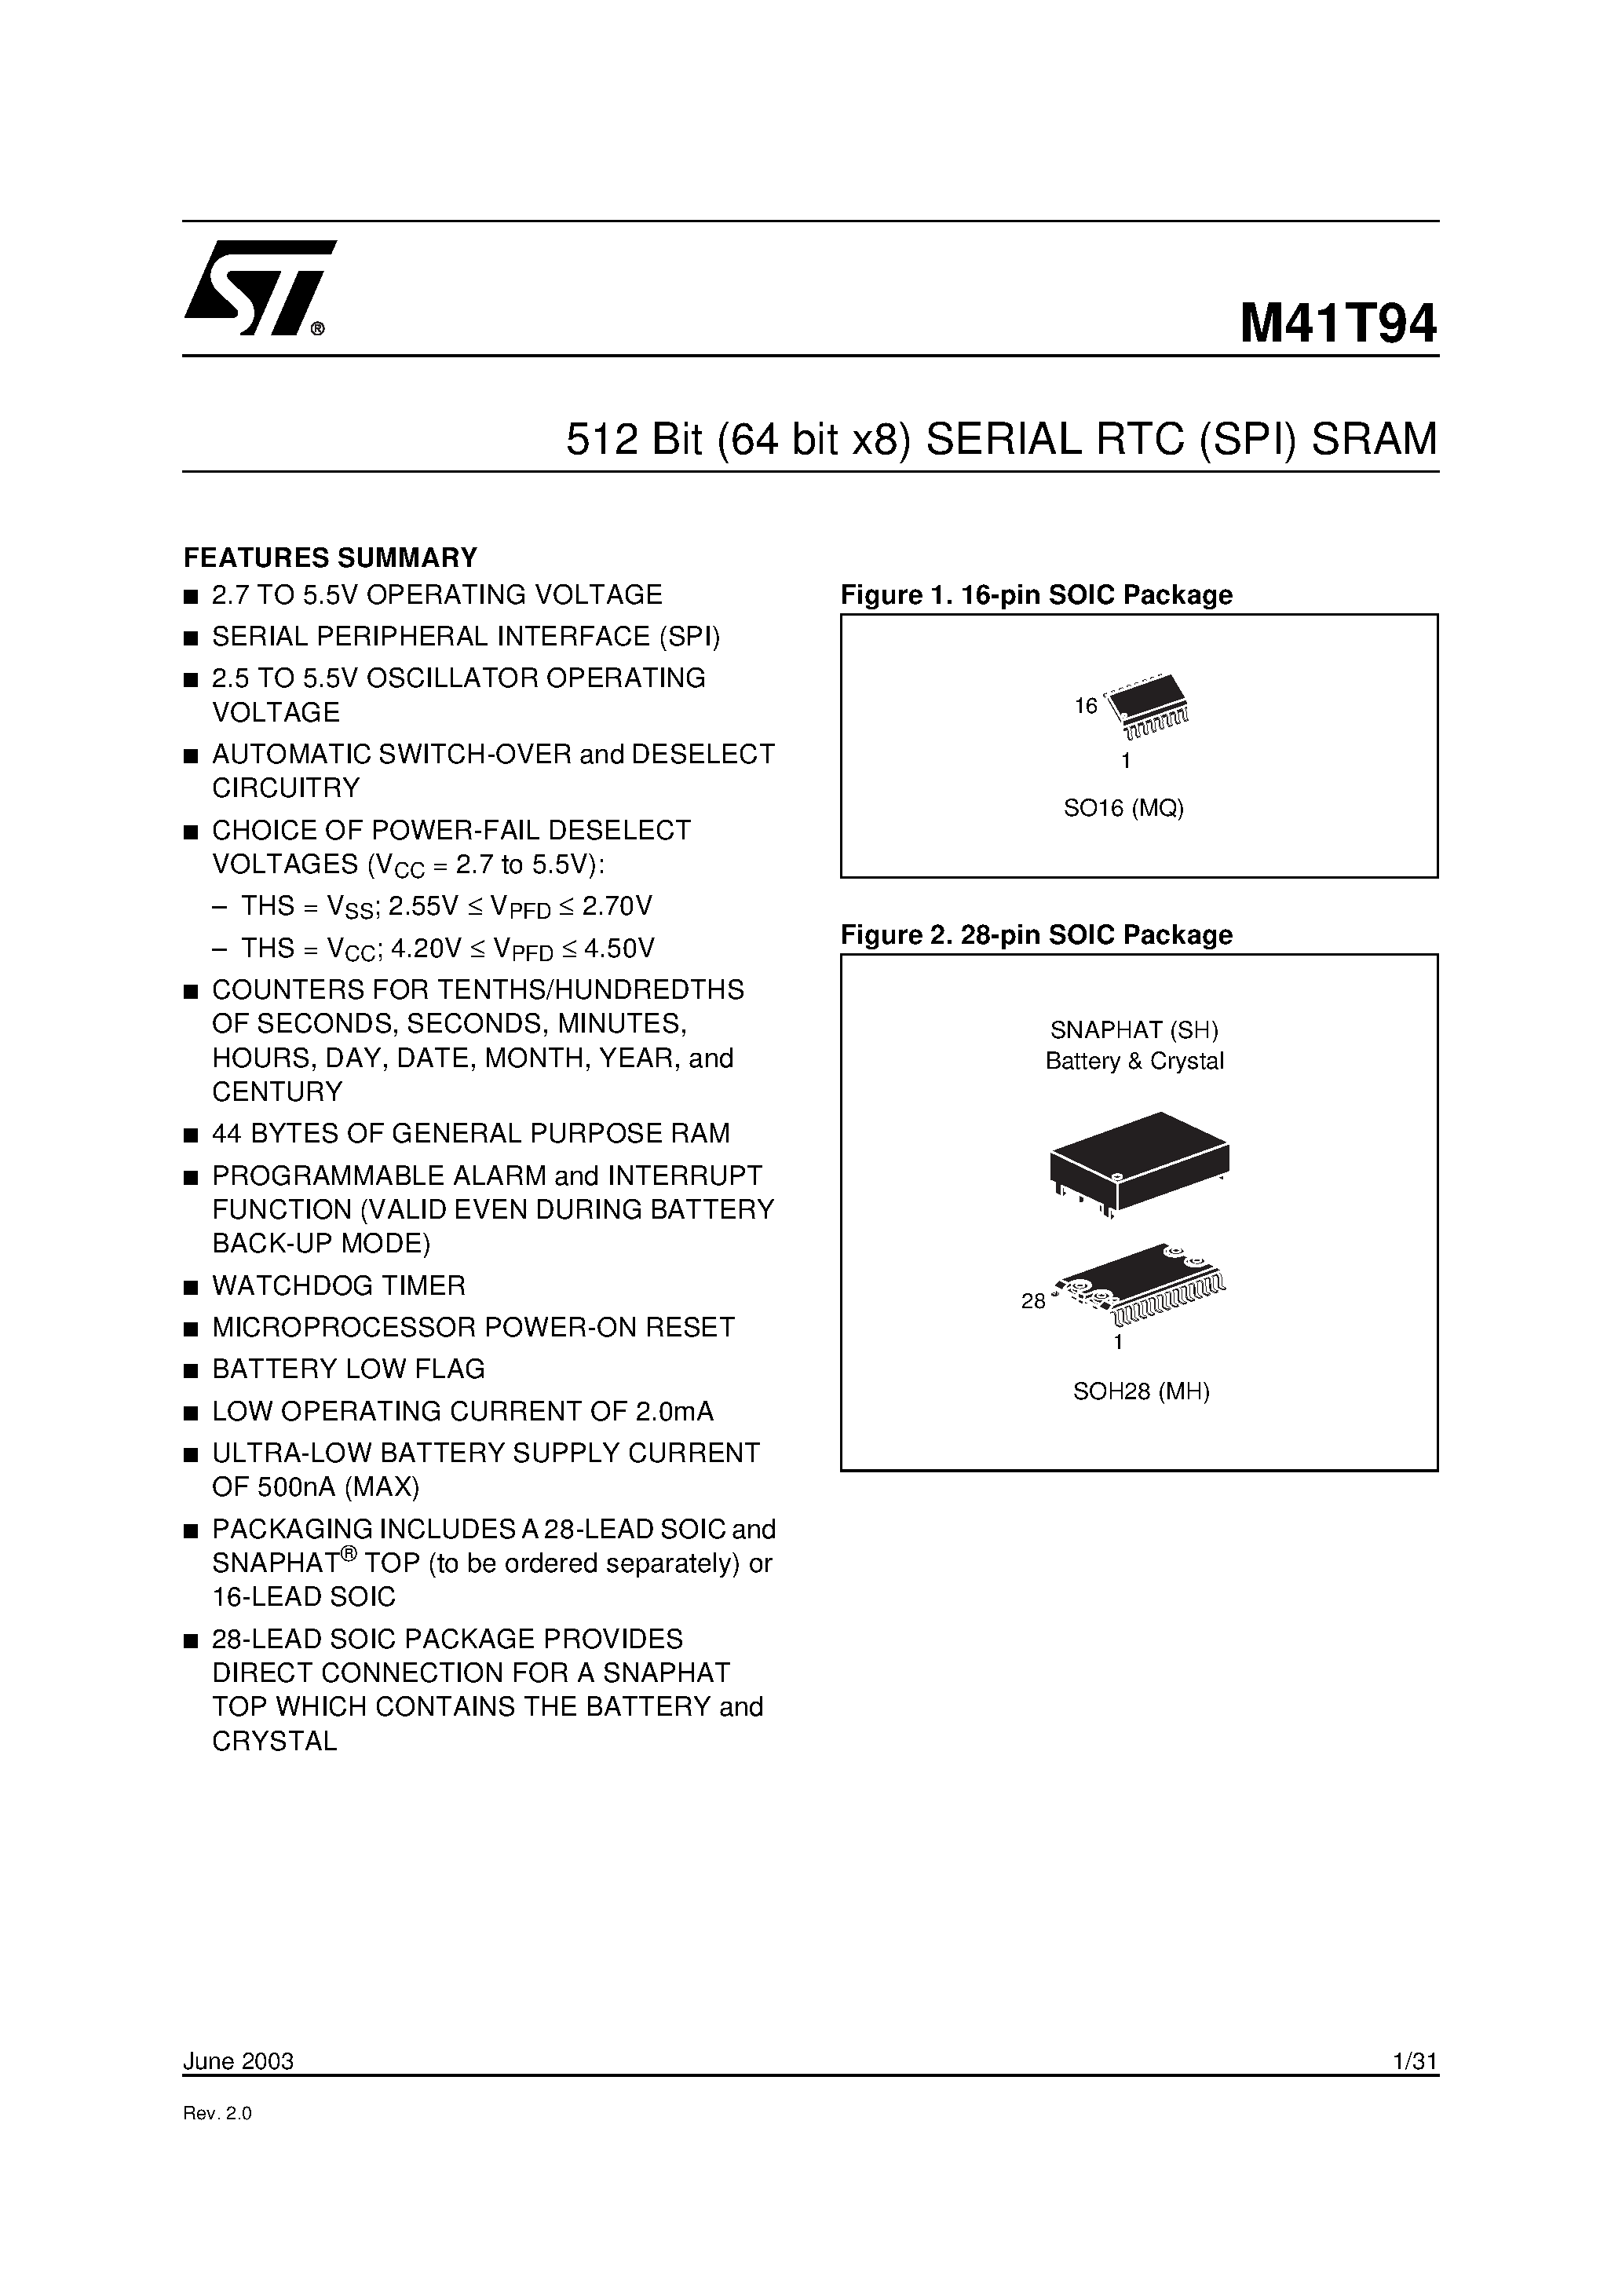 Datasheet M41T94 - 512 Bit 64 bit x8 SERIAL RTC SPI SRAM page 1